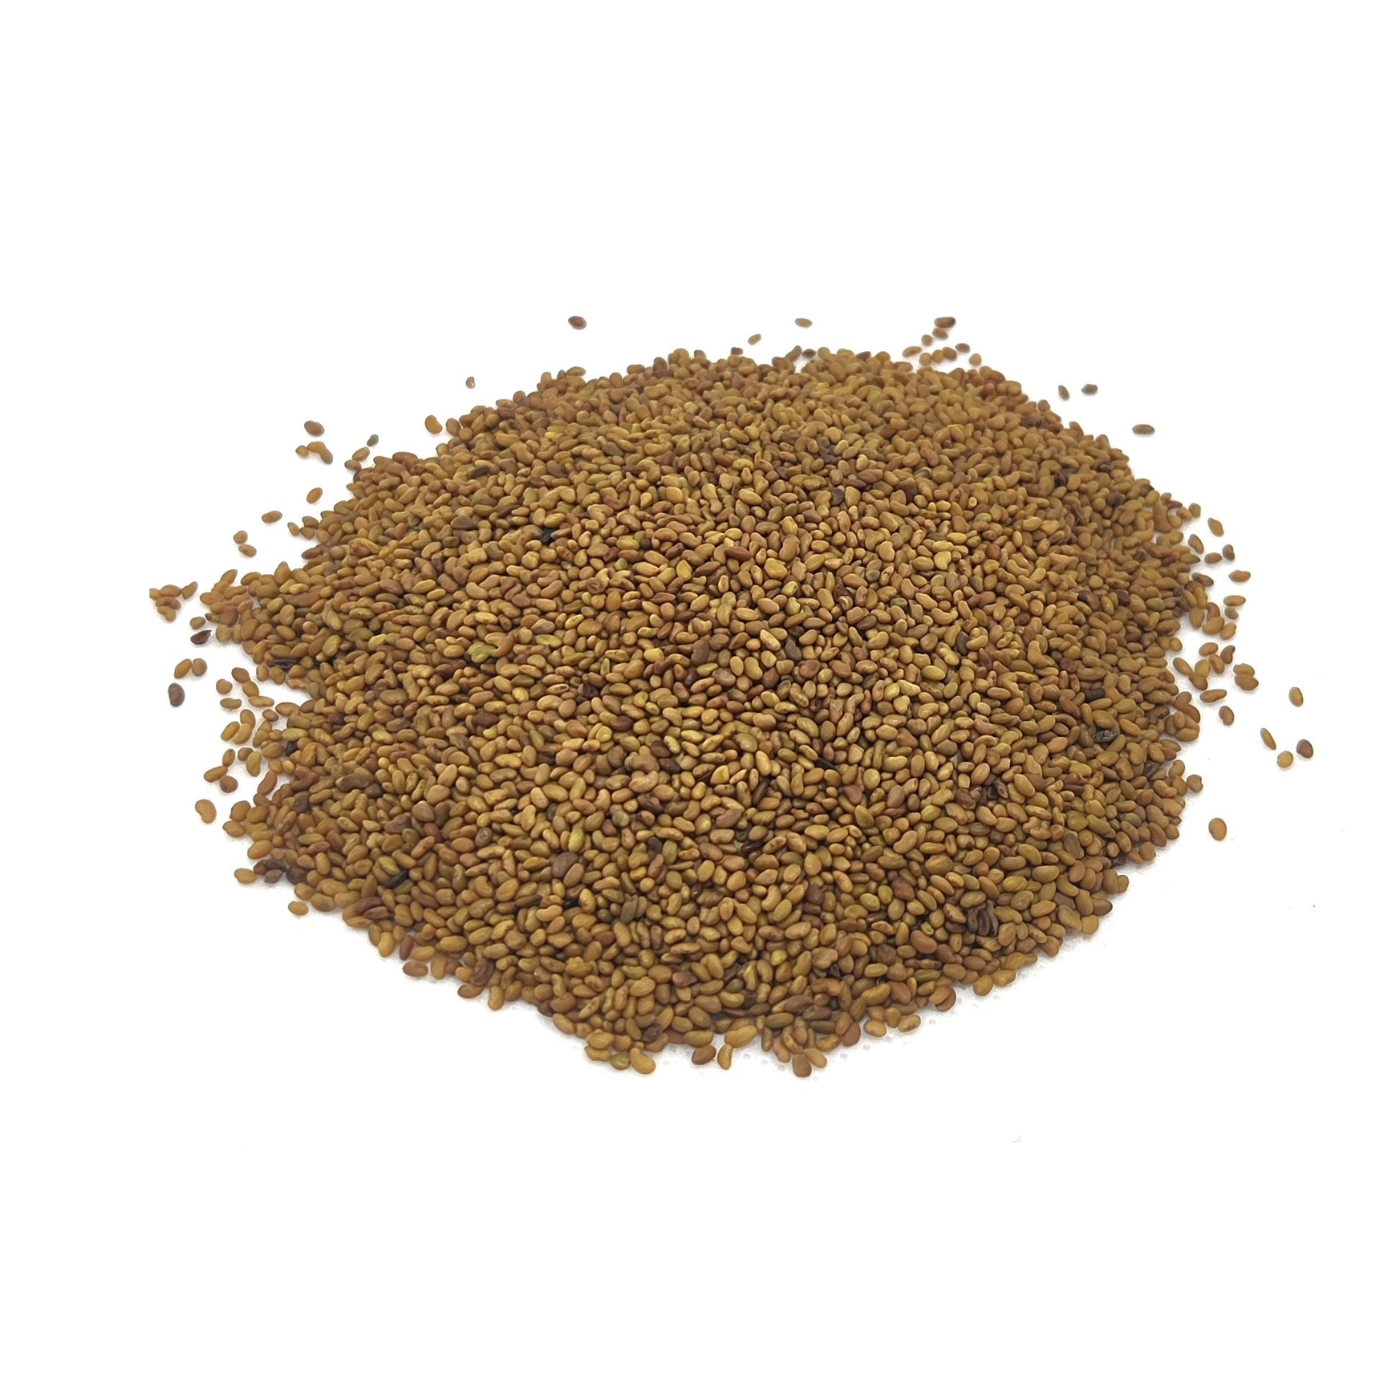 Organic seeds of Alfalfa